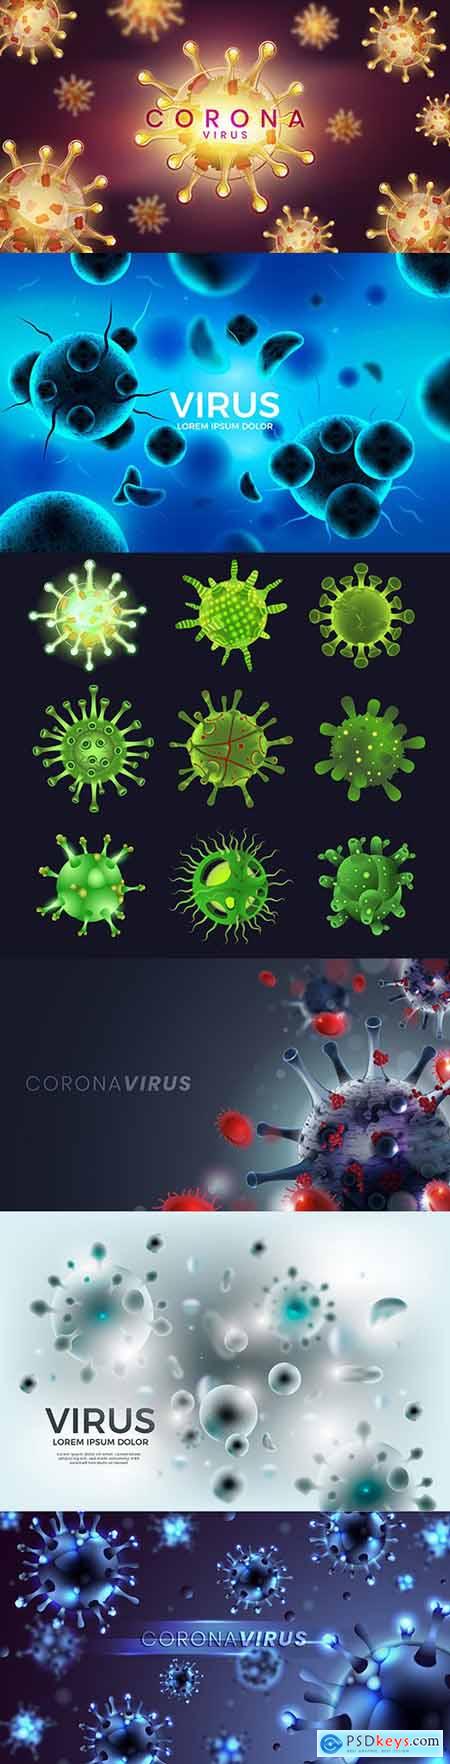 Coronavirus realistic background with bacteria